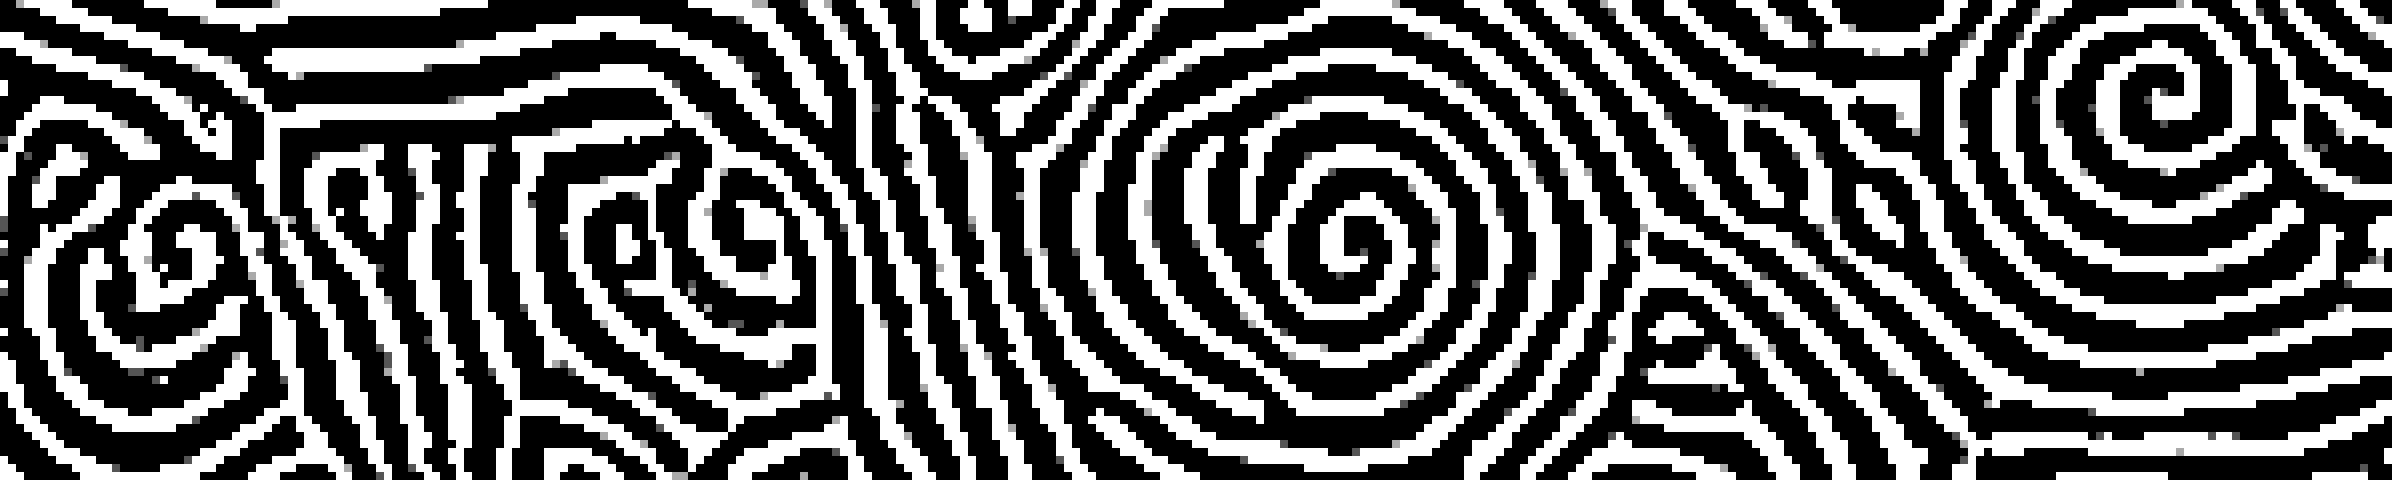 Spiral Defect Chaos pattern strip